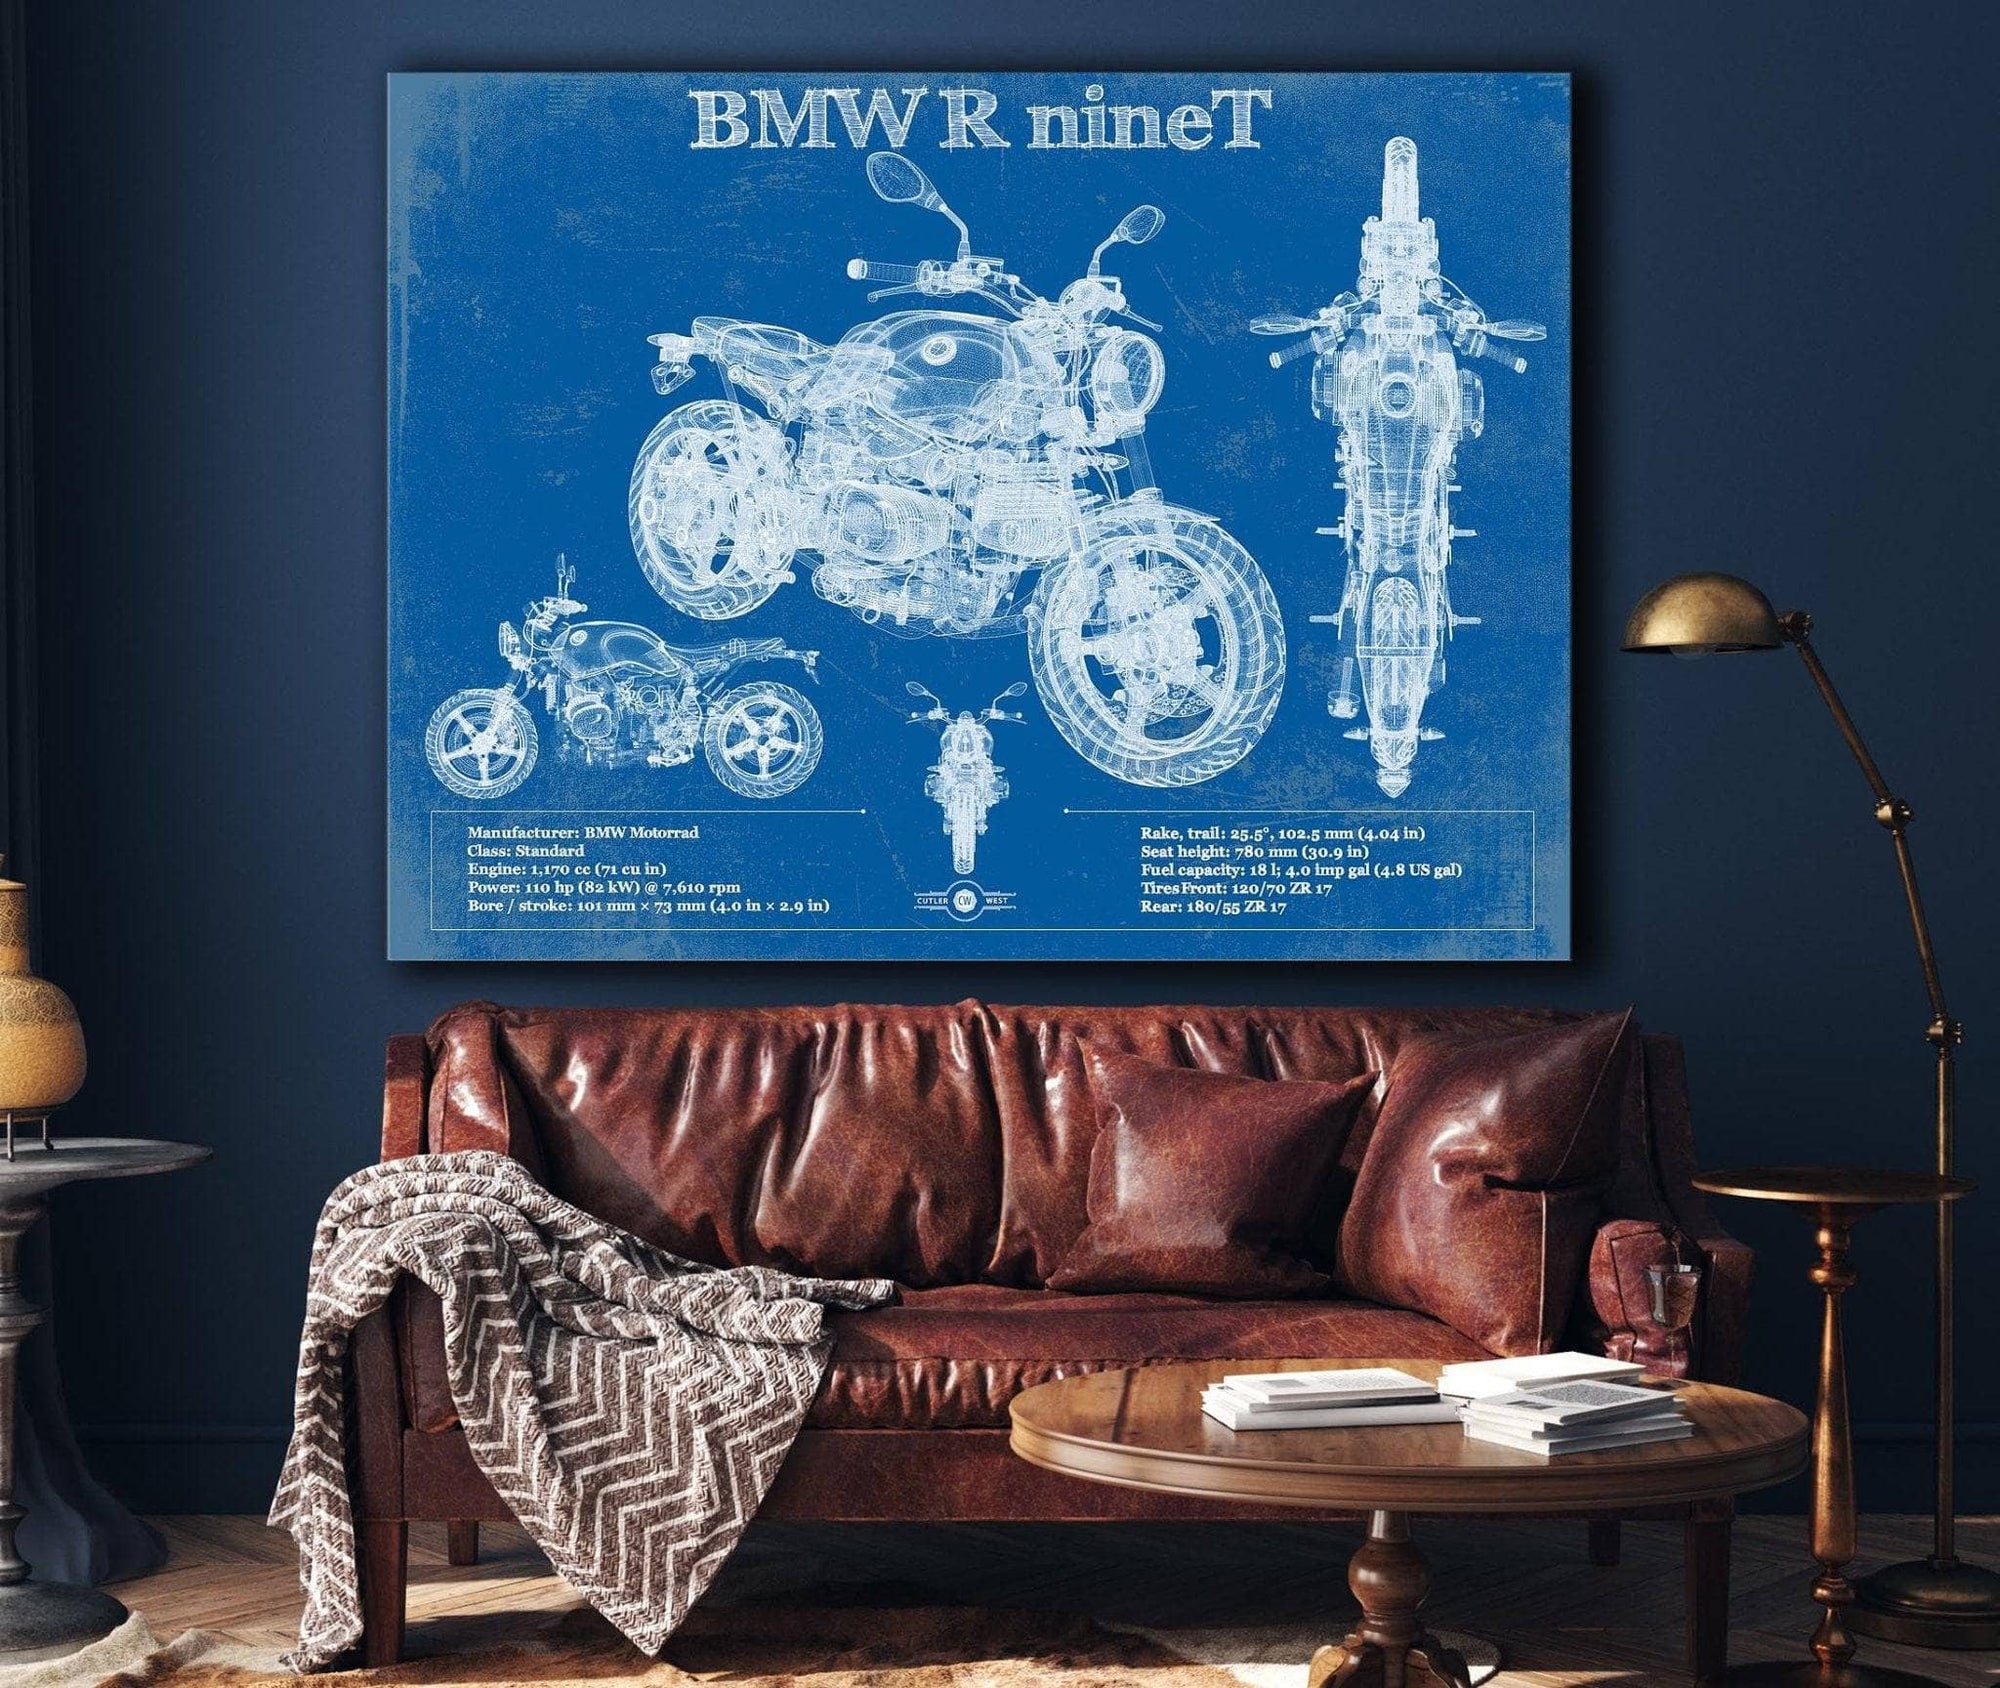 Cutler West Vehicle Collection BMW R nine T Blueprint Vintage Motorcycle Print